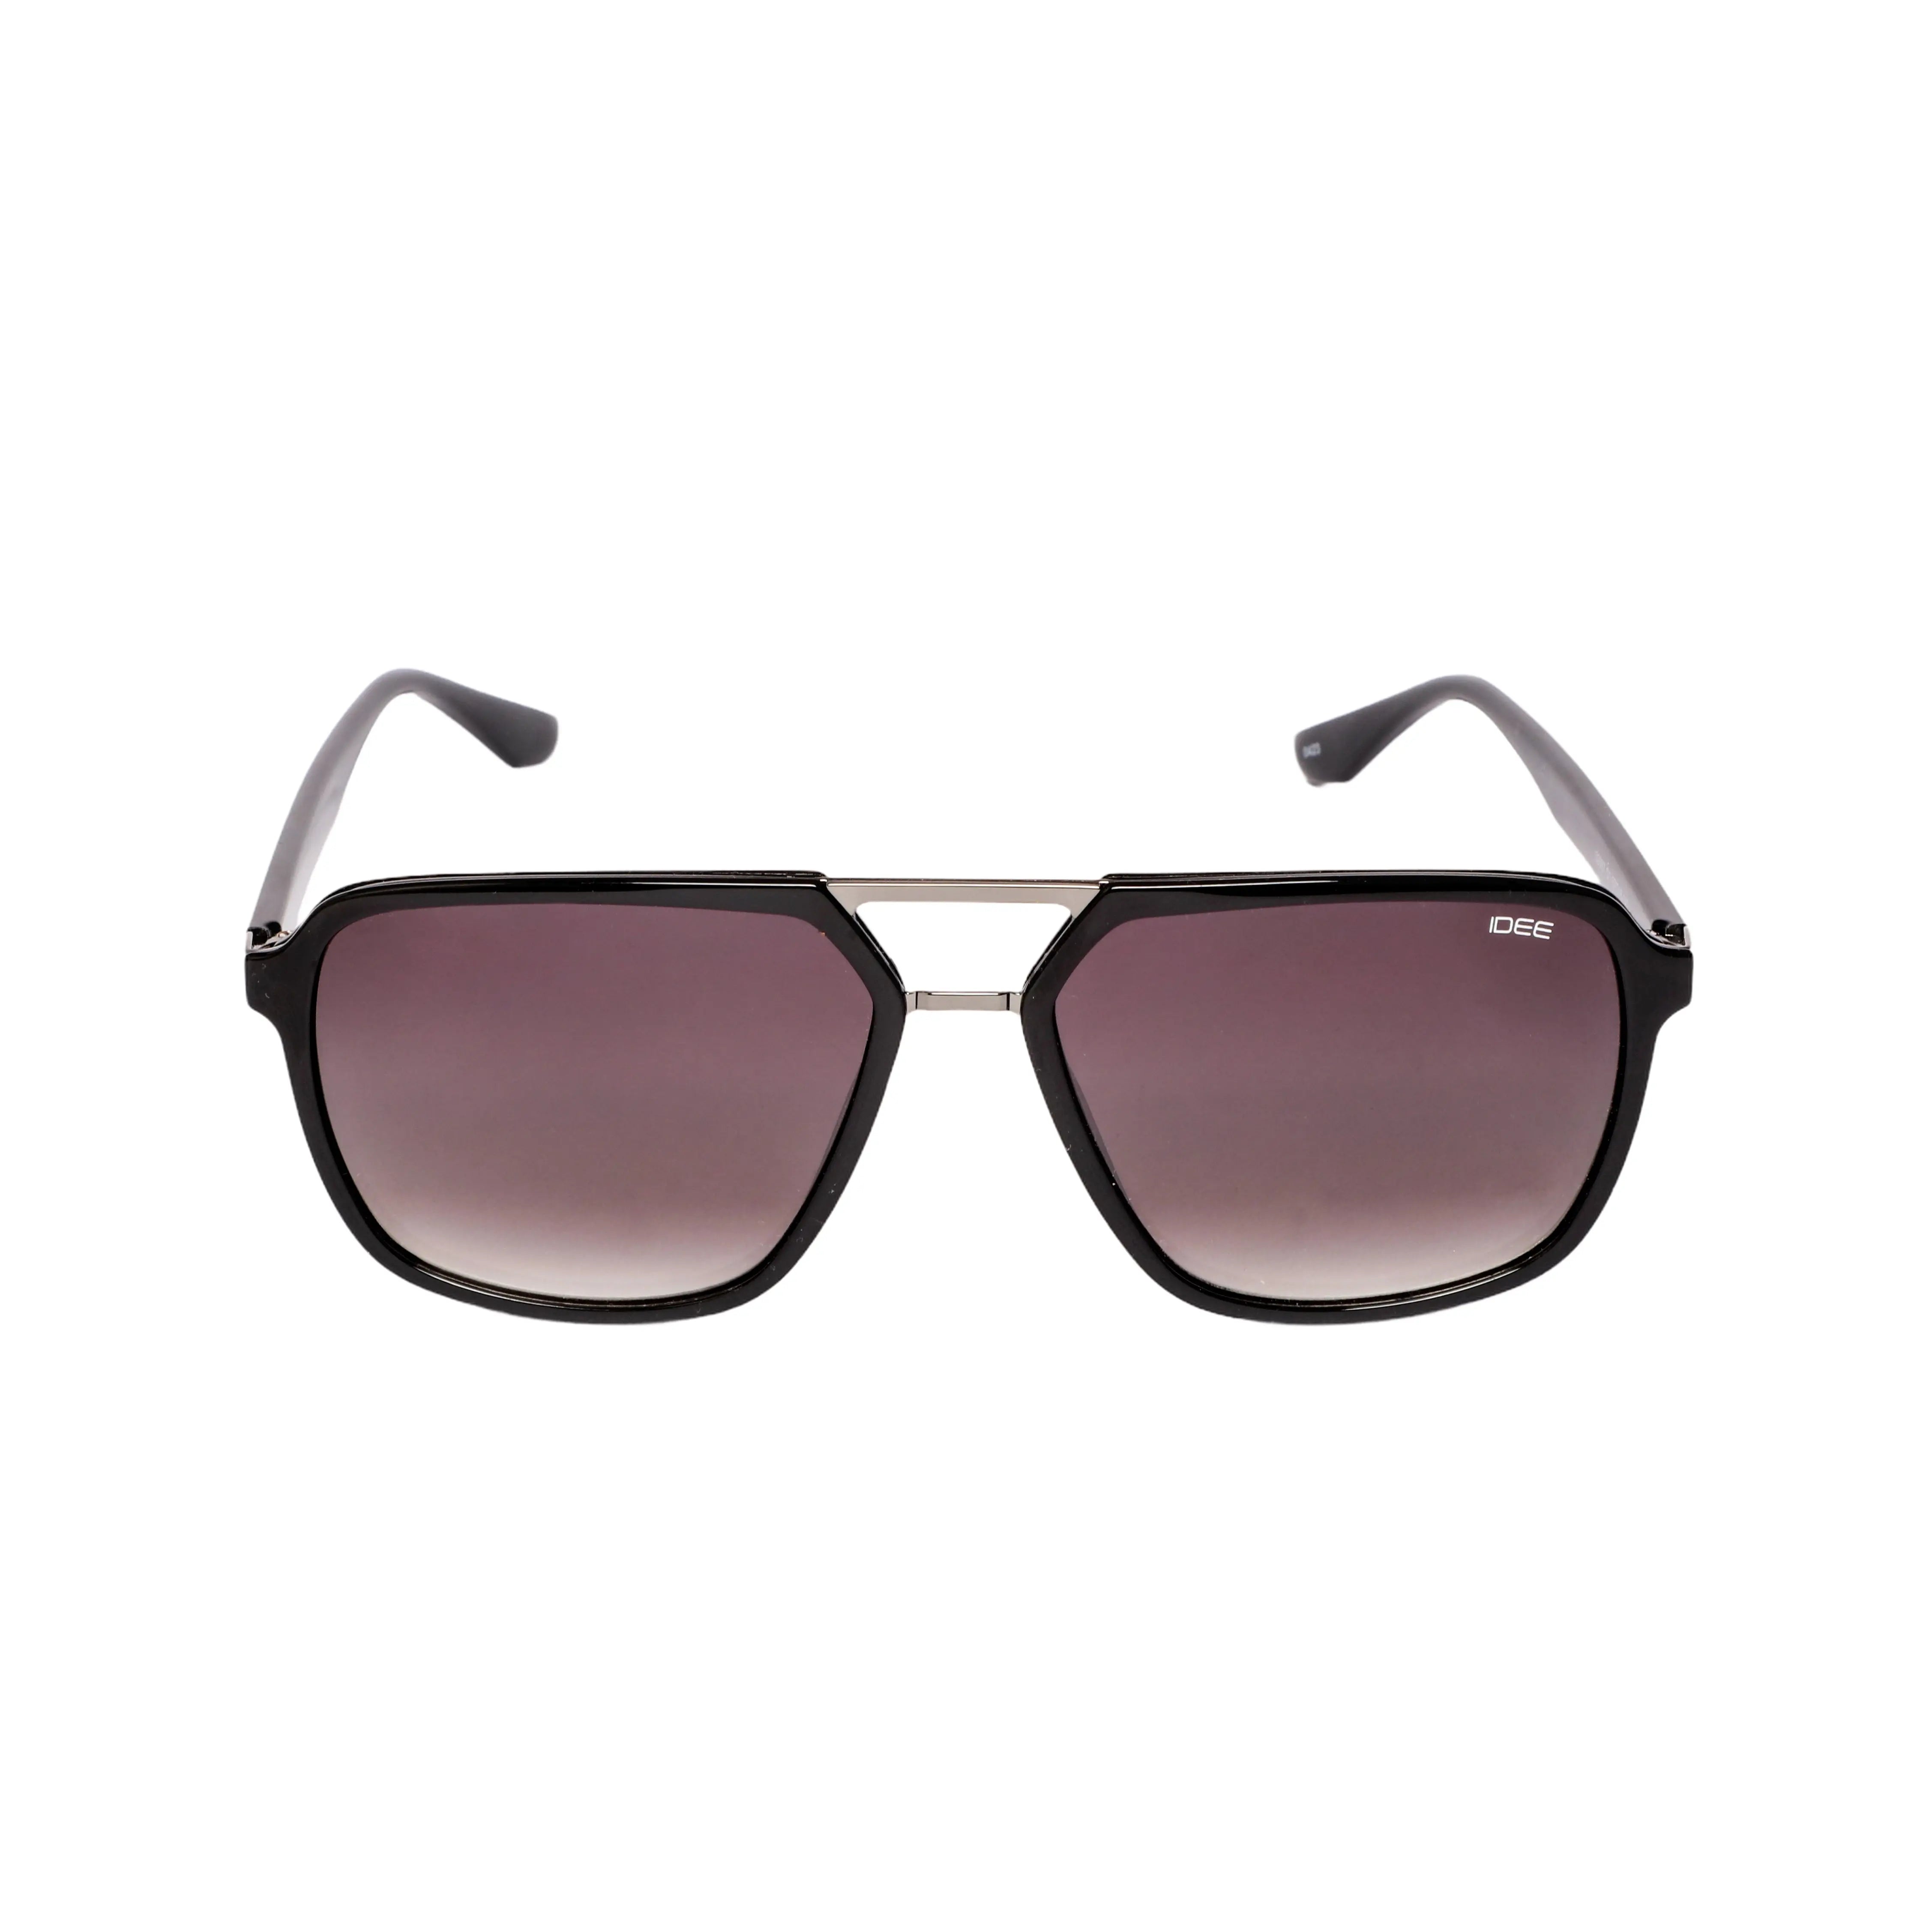 IDEE-S2987--C1 Sunglasses - Premium Sunglasses from IDEE - Just Rs. 3740! Shop now at Laxmi Opticians